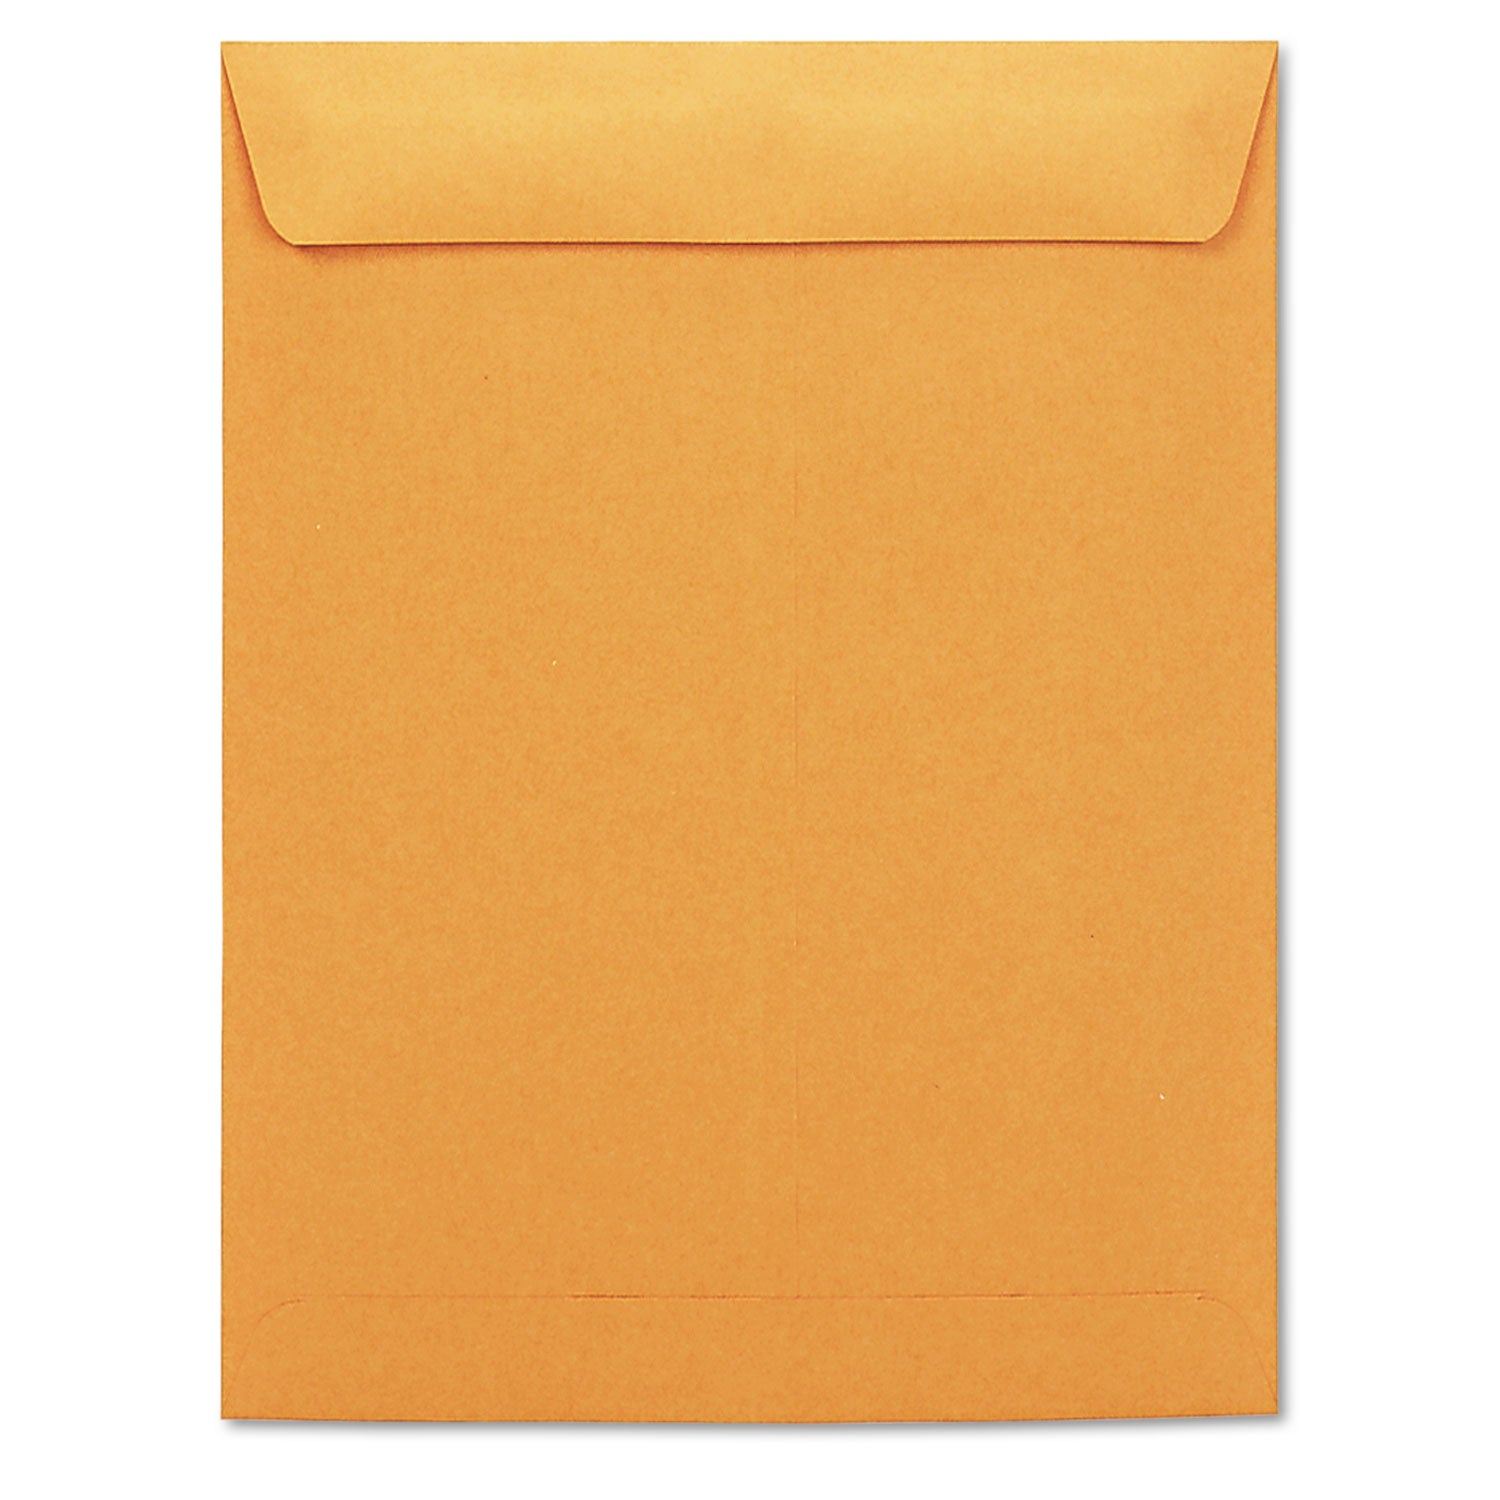 Catalog Envelope, #13 1/2, Square Flap, Gummed Closure, 10 x 13, Brown Kraft, 250/Box - 